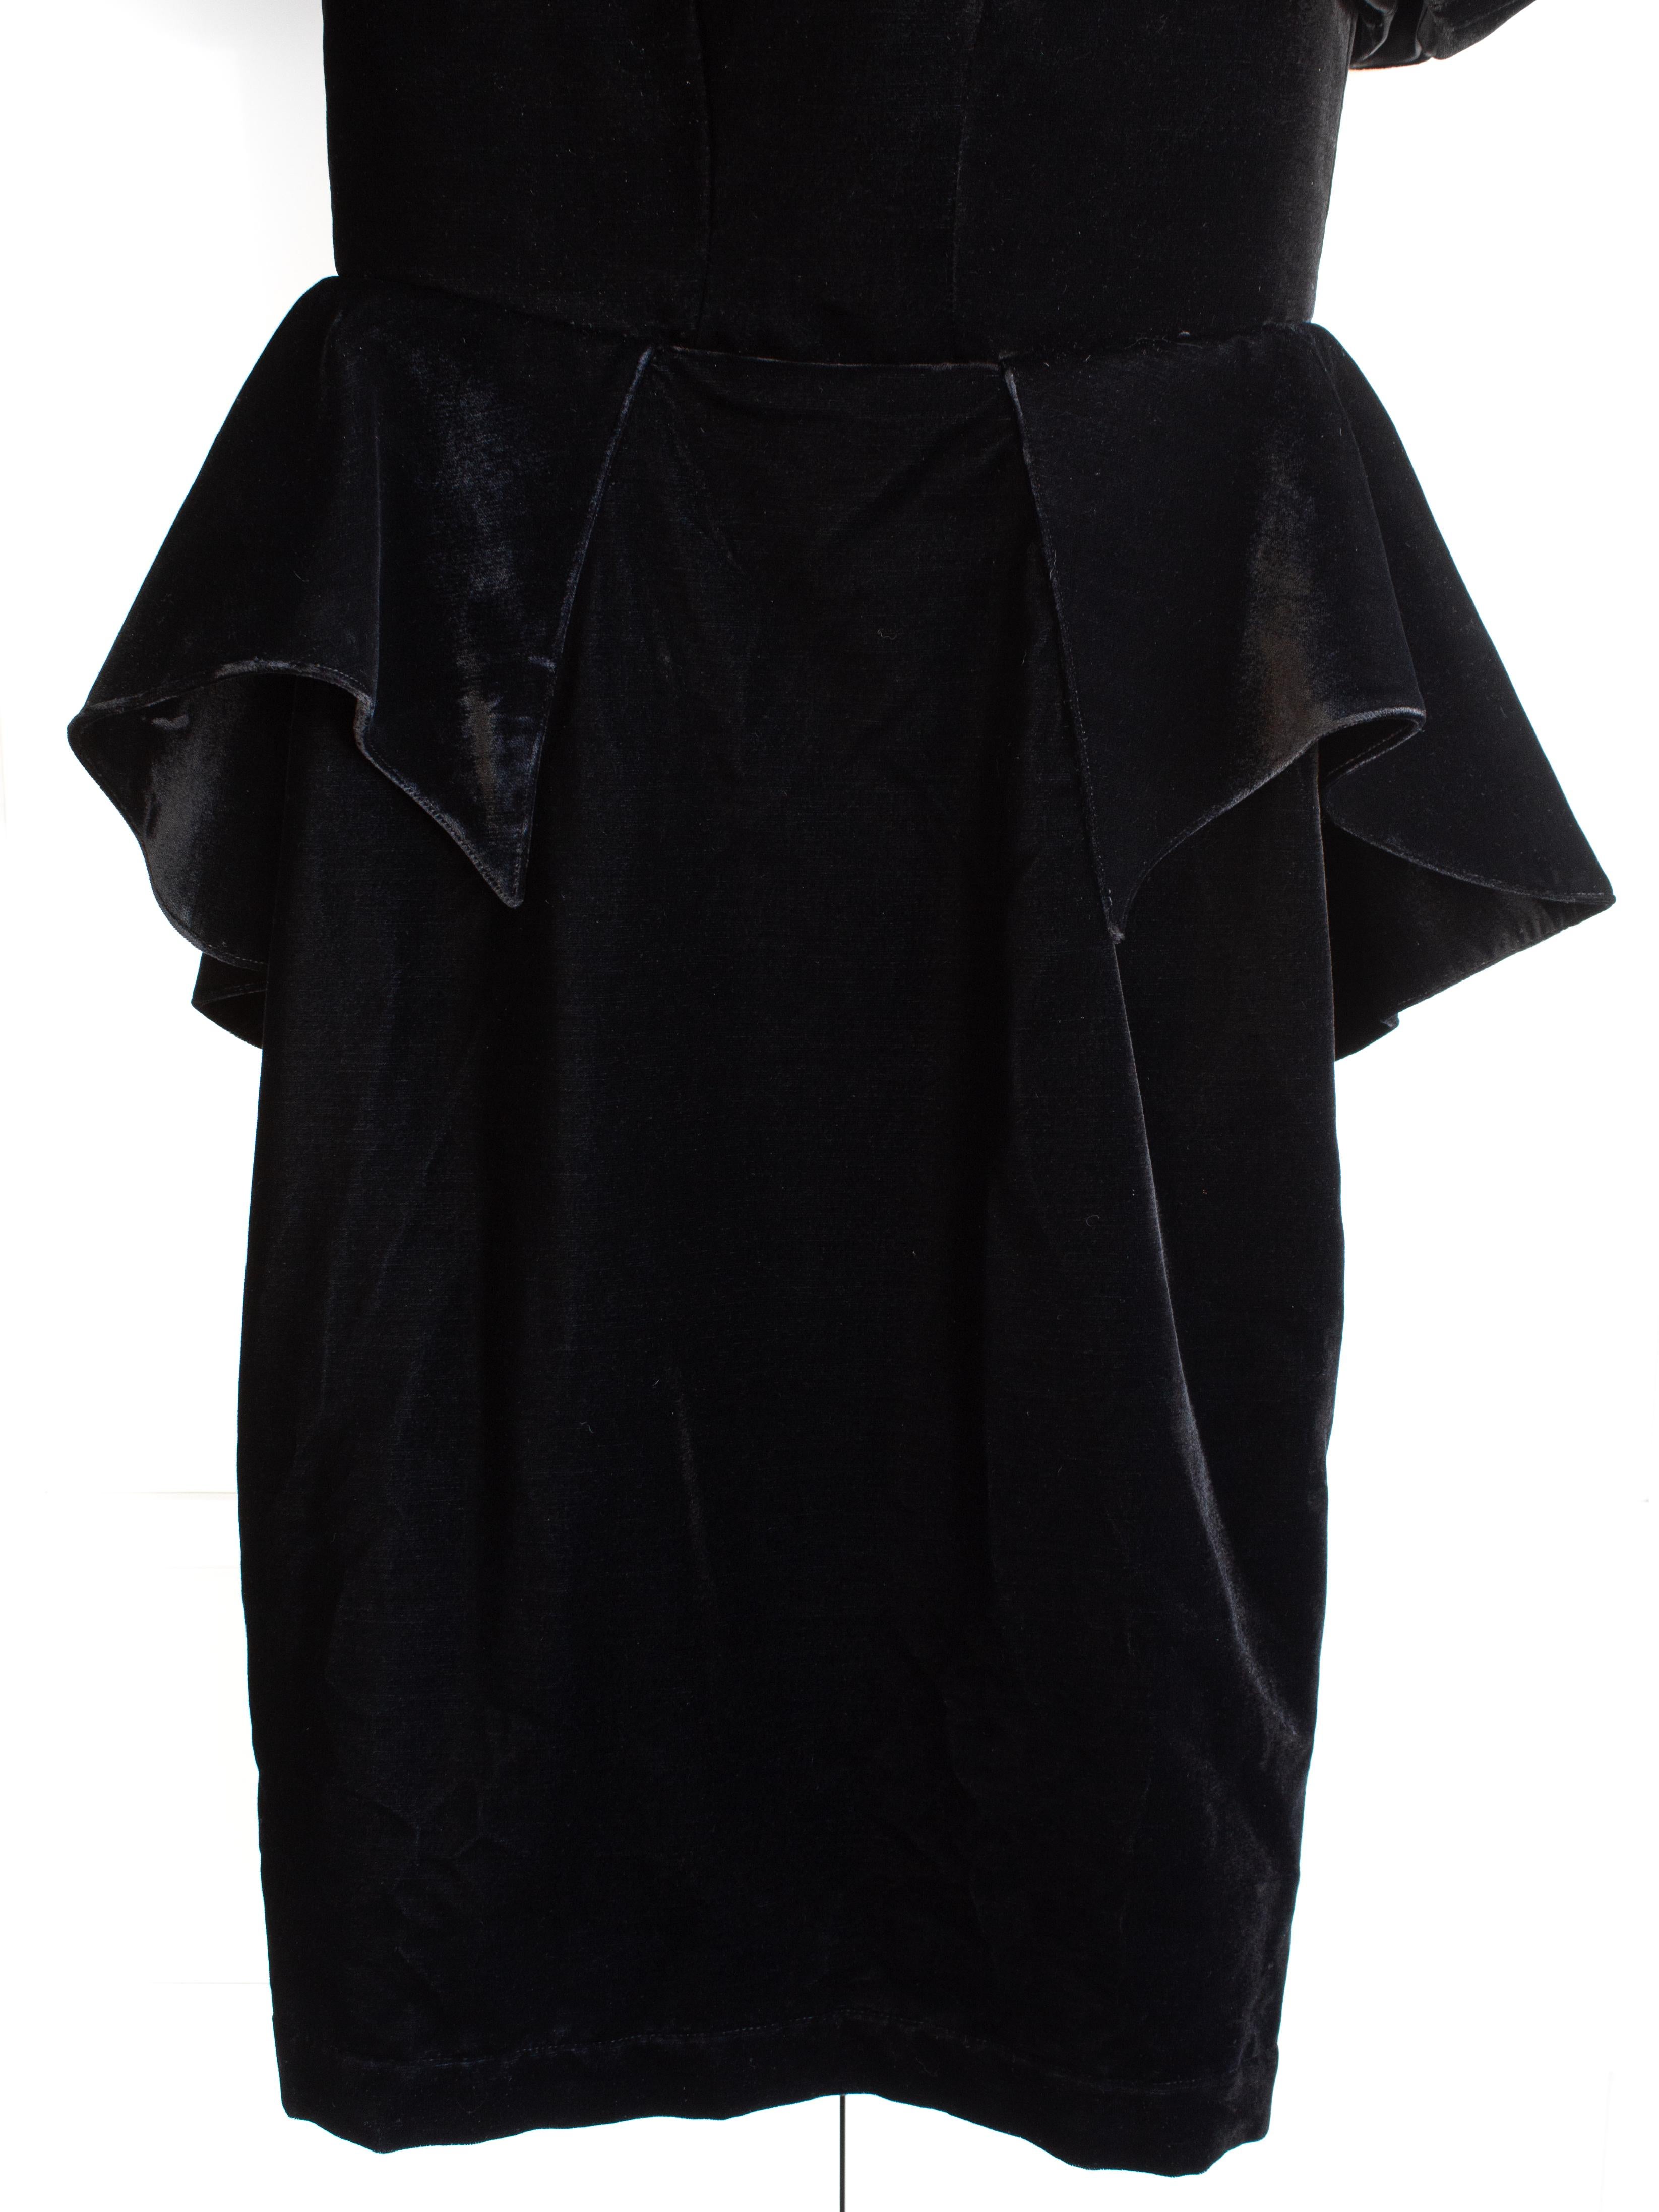 Iconic Thierry Mugler Vintage 1981 Black Velvet Peplum Vampire Dress 6